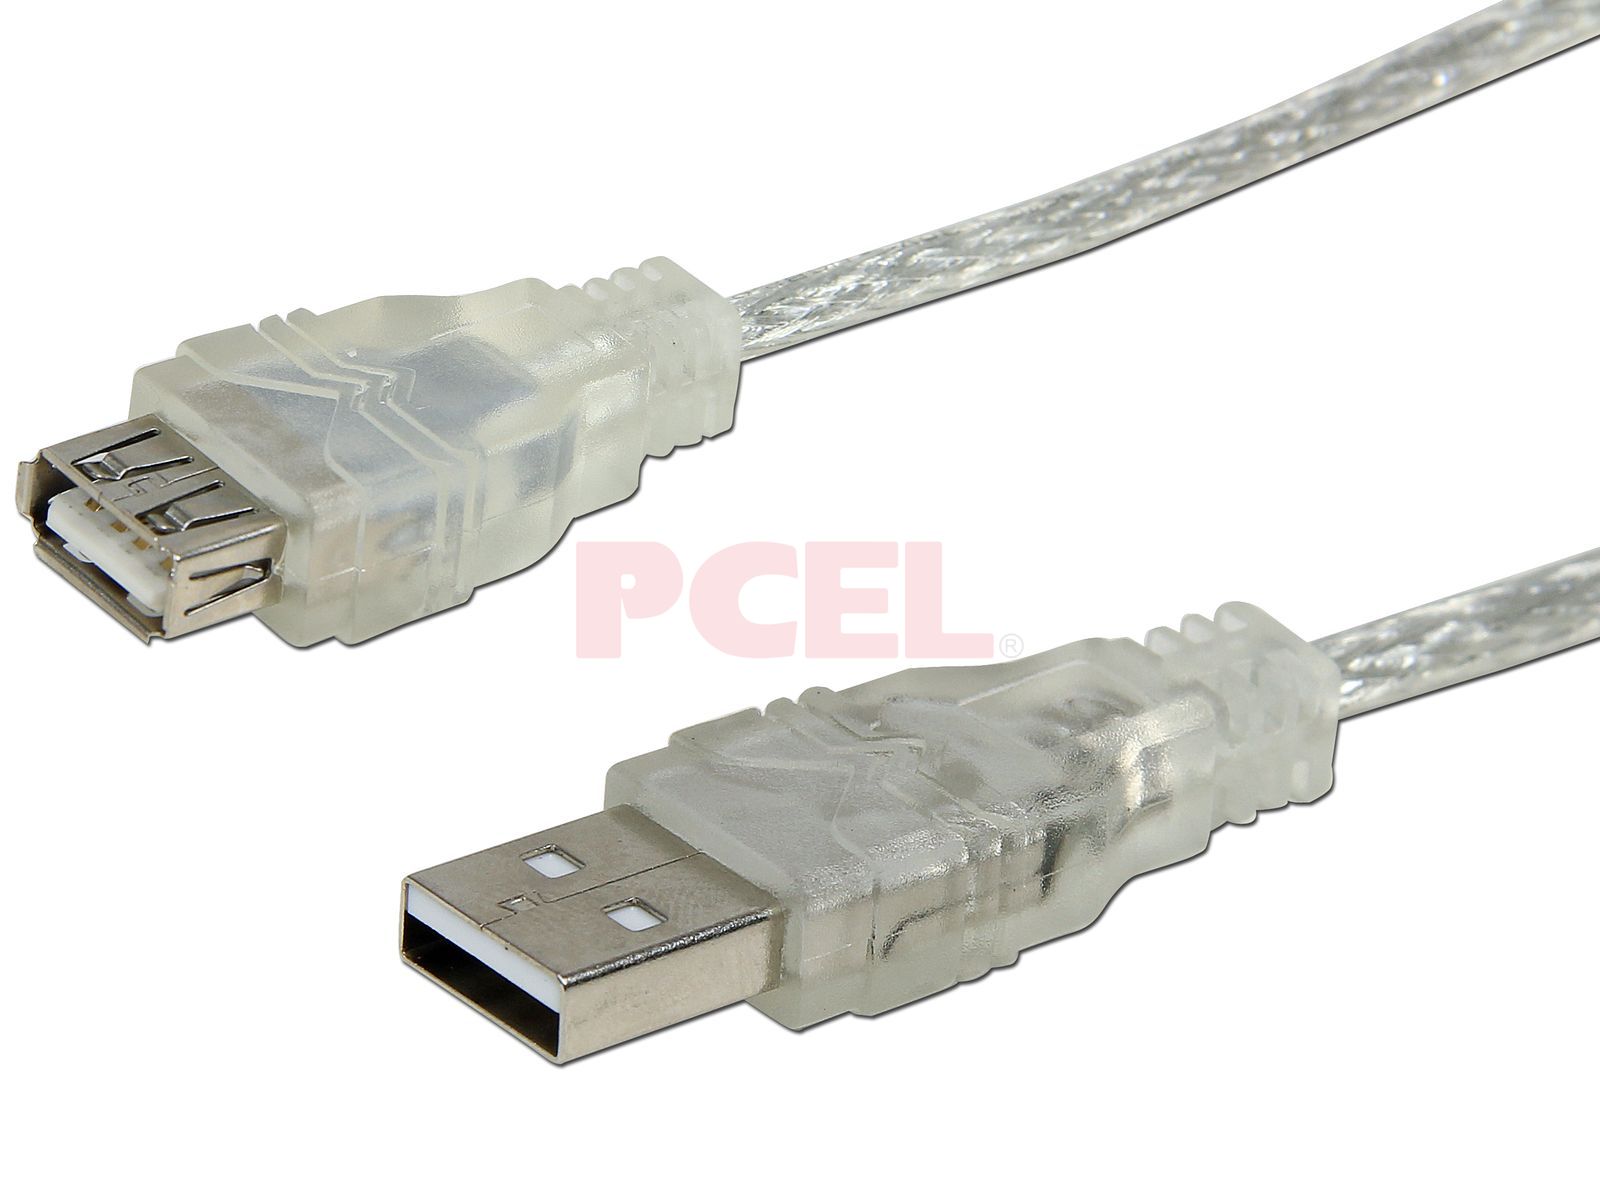 Cable usb 2.0 macho - hembra 5m 8425998512533 51253 EDM